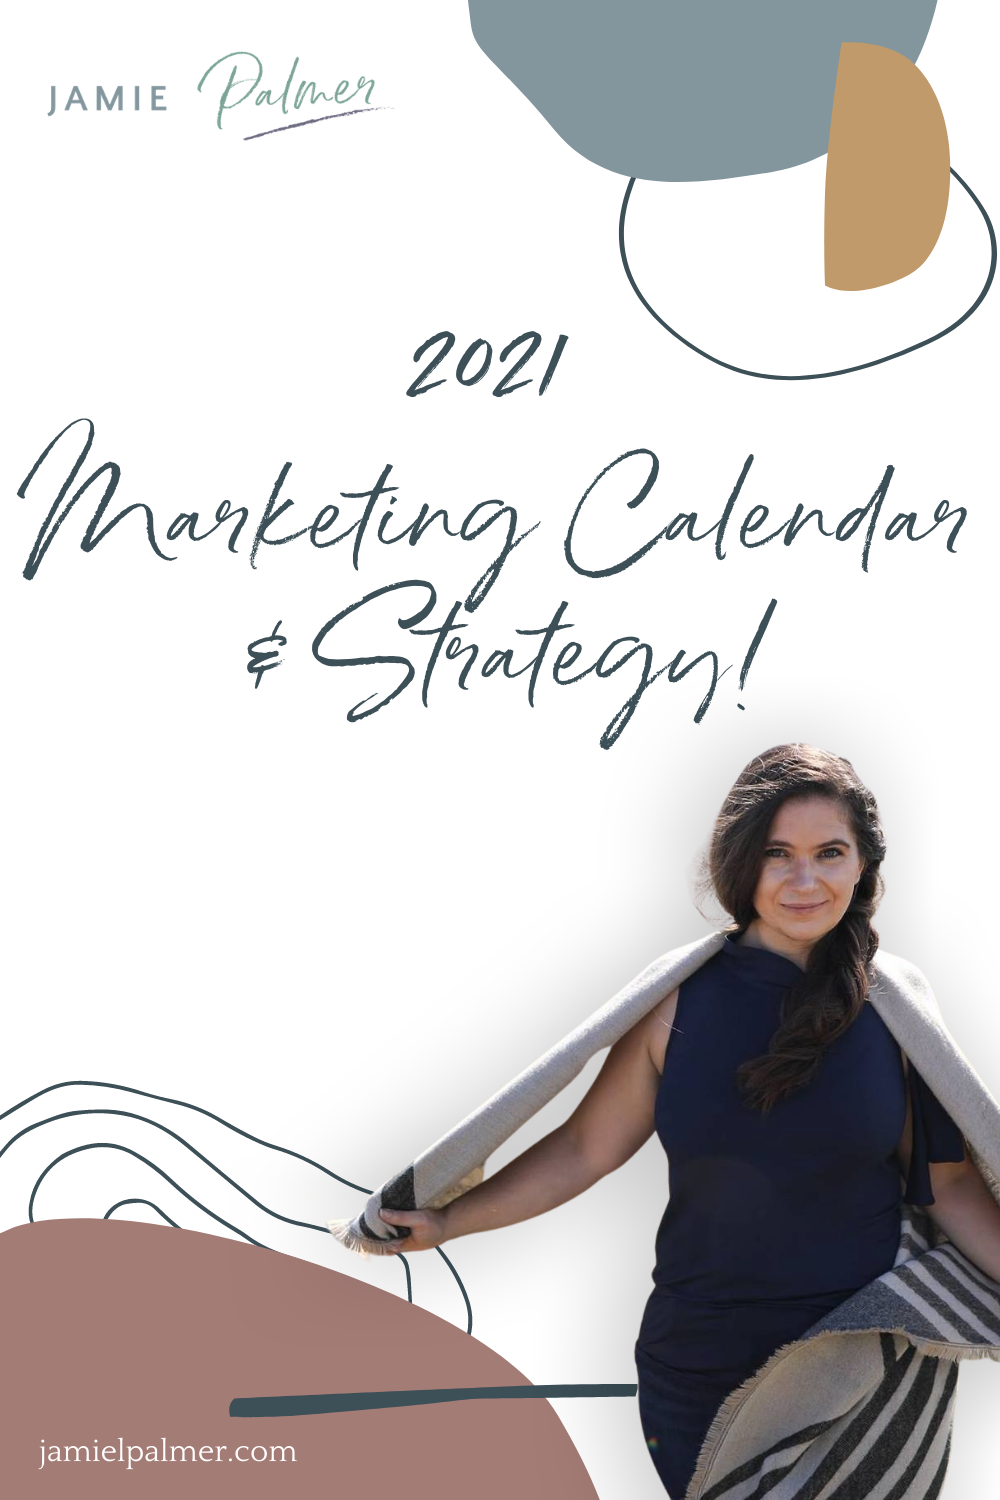 2021 marketing calendar and strategy